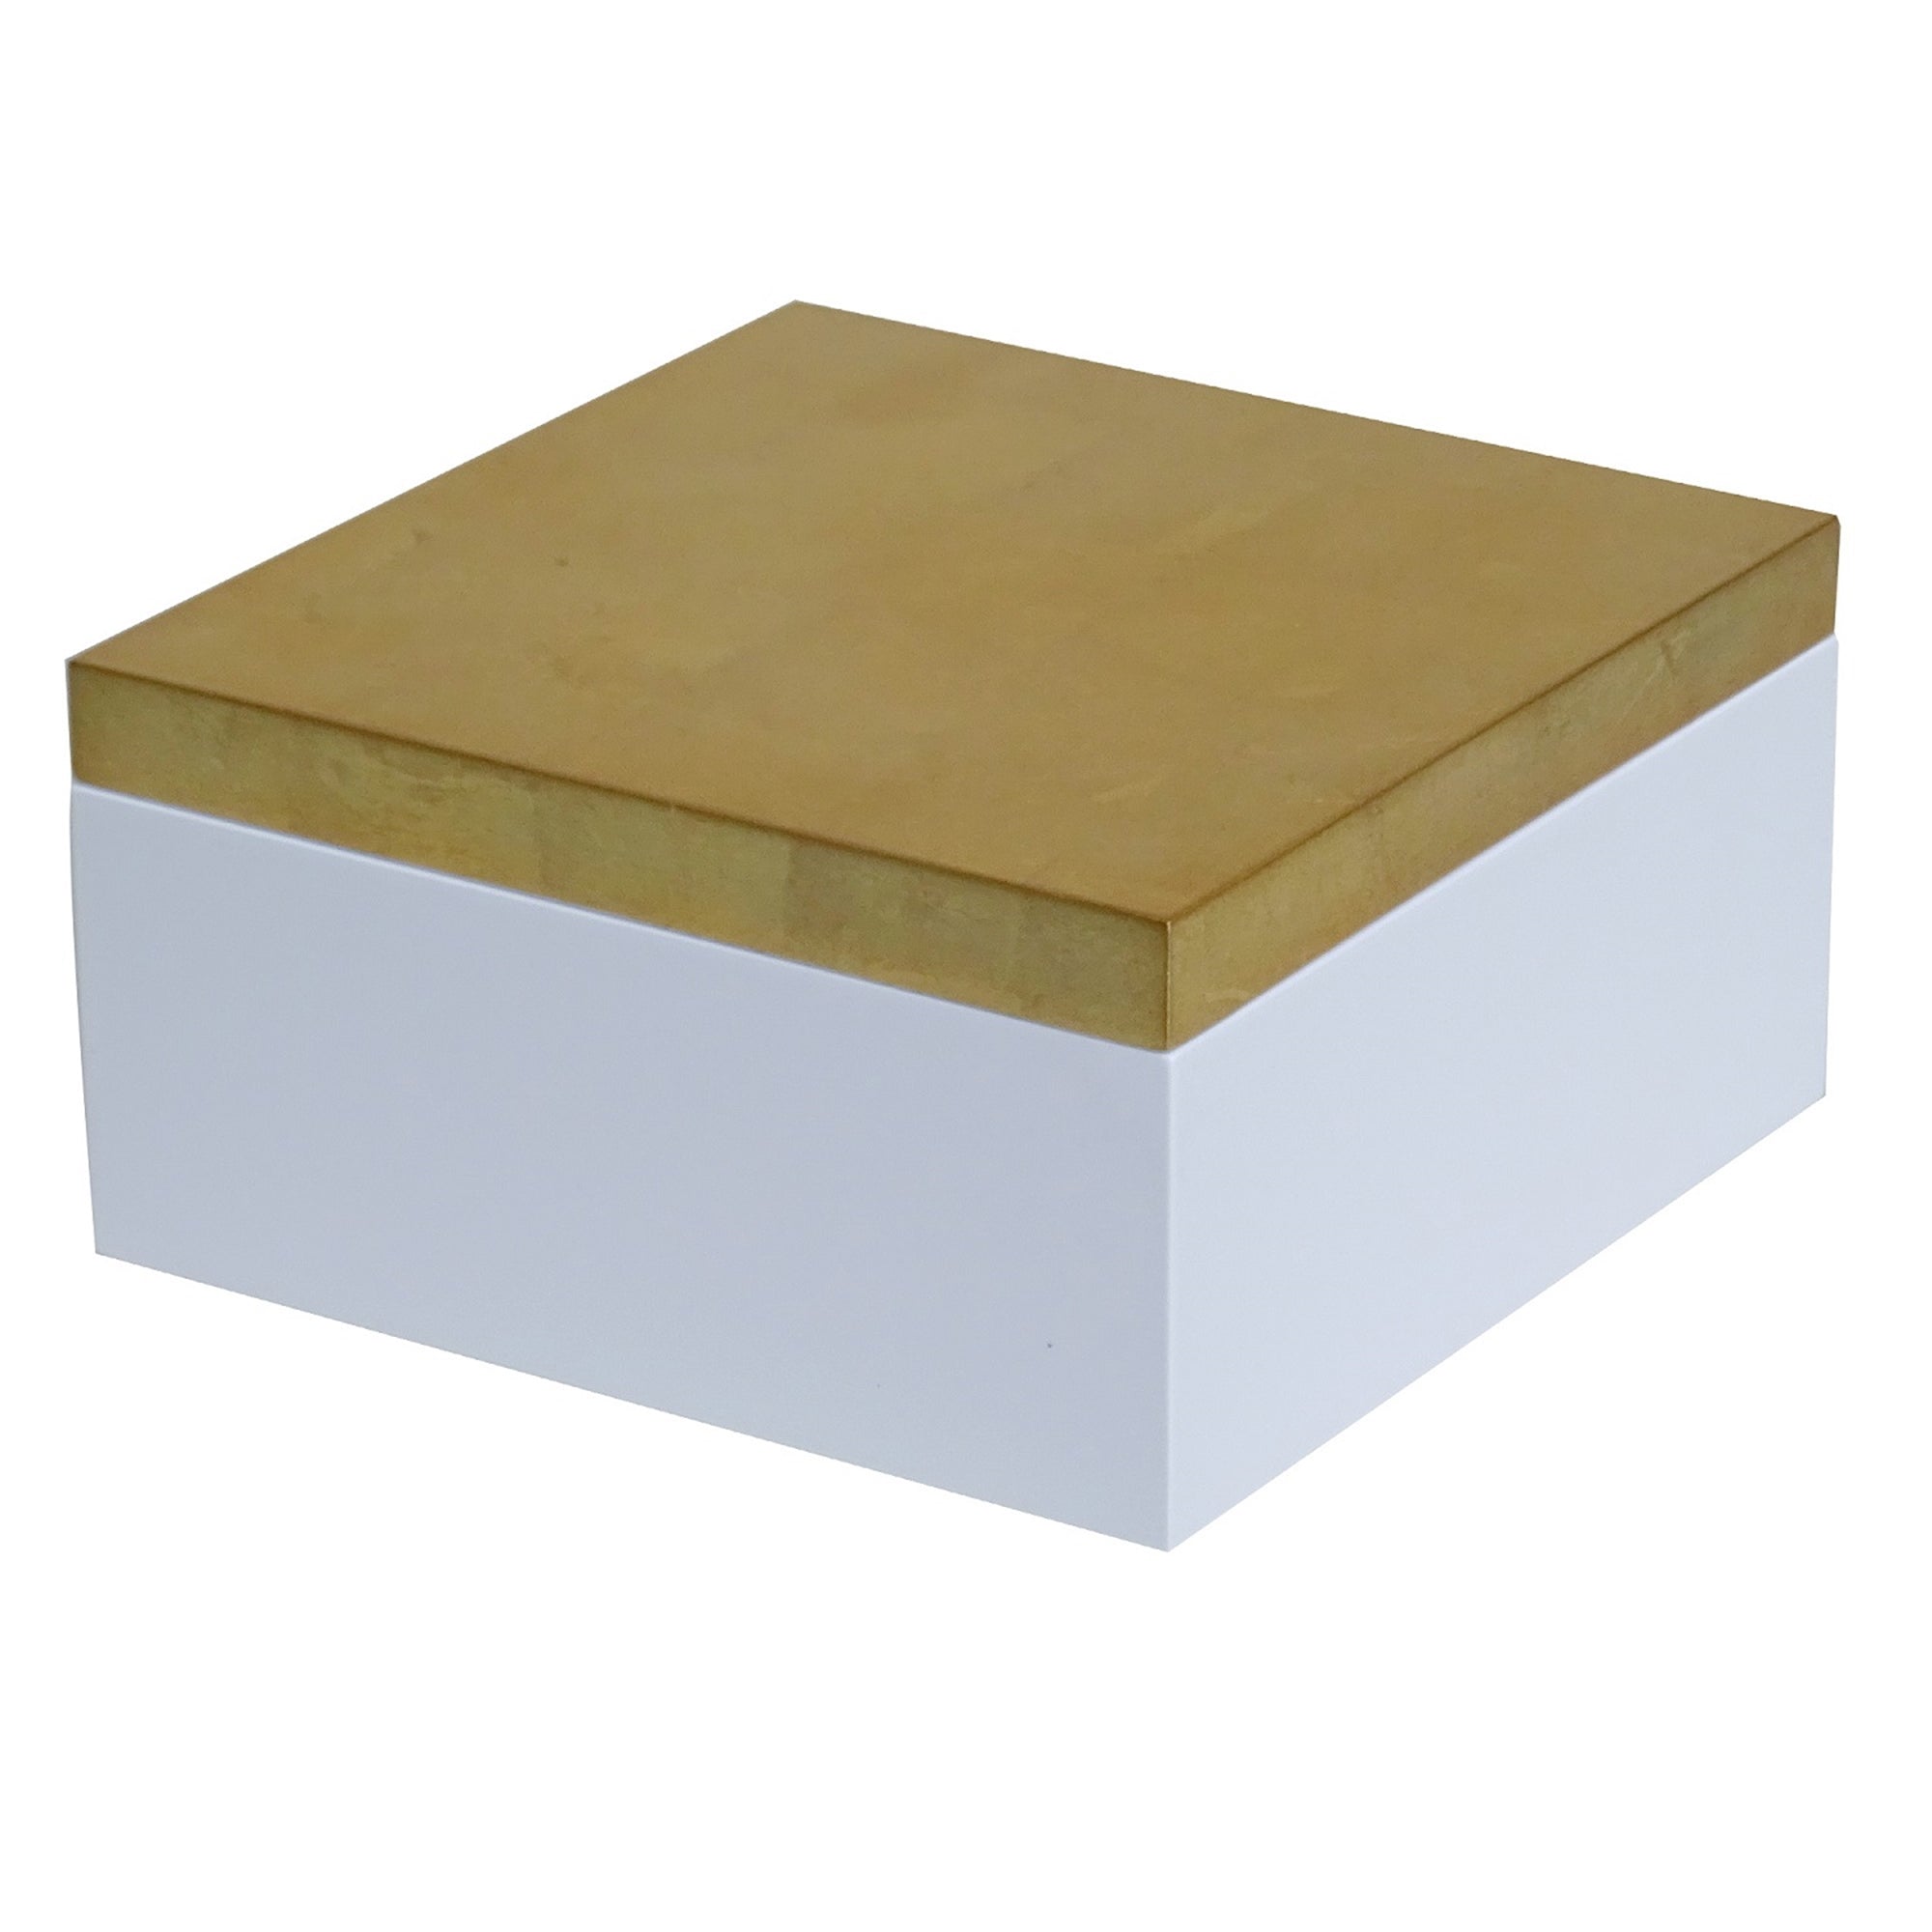 Lg. Square Box w/ Gold Leaf Lacquer Lid